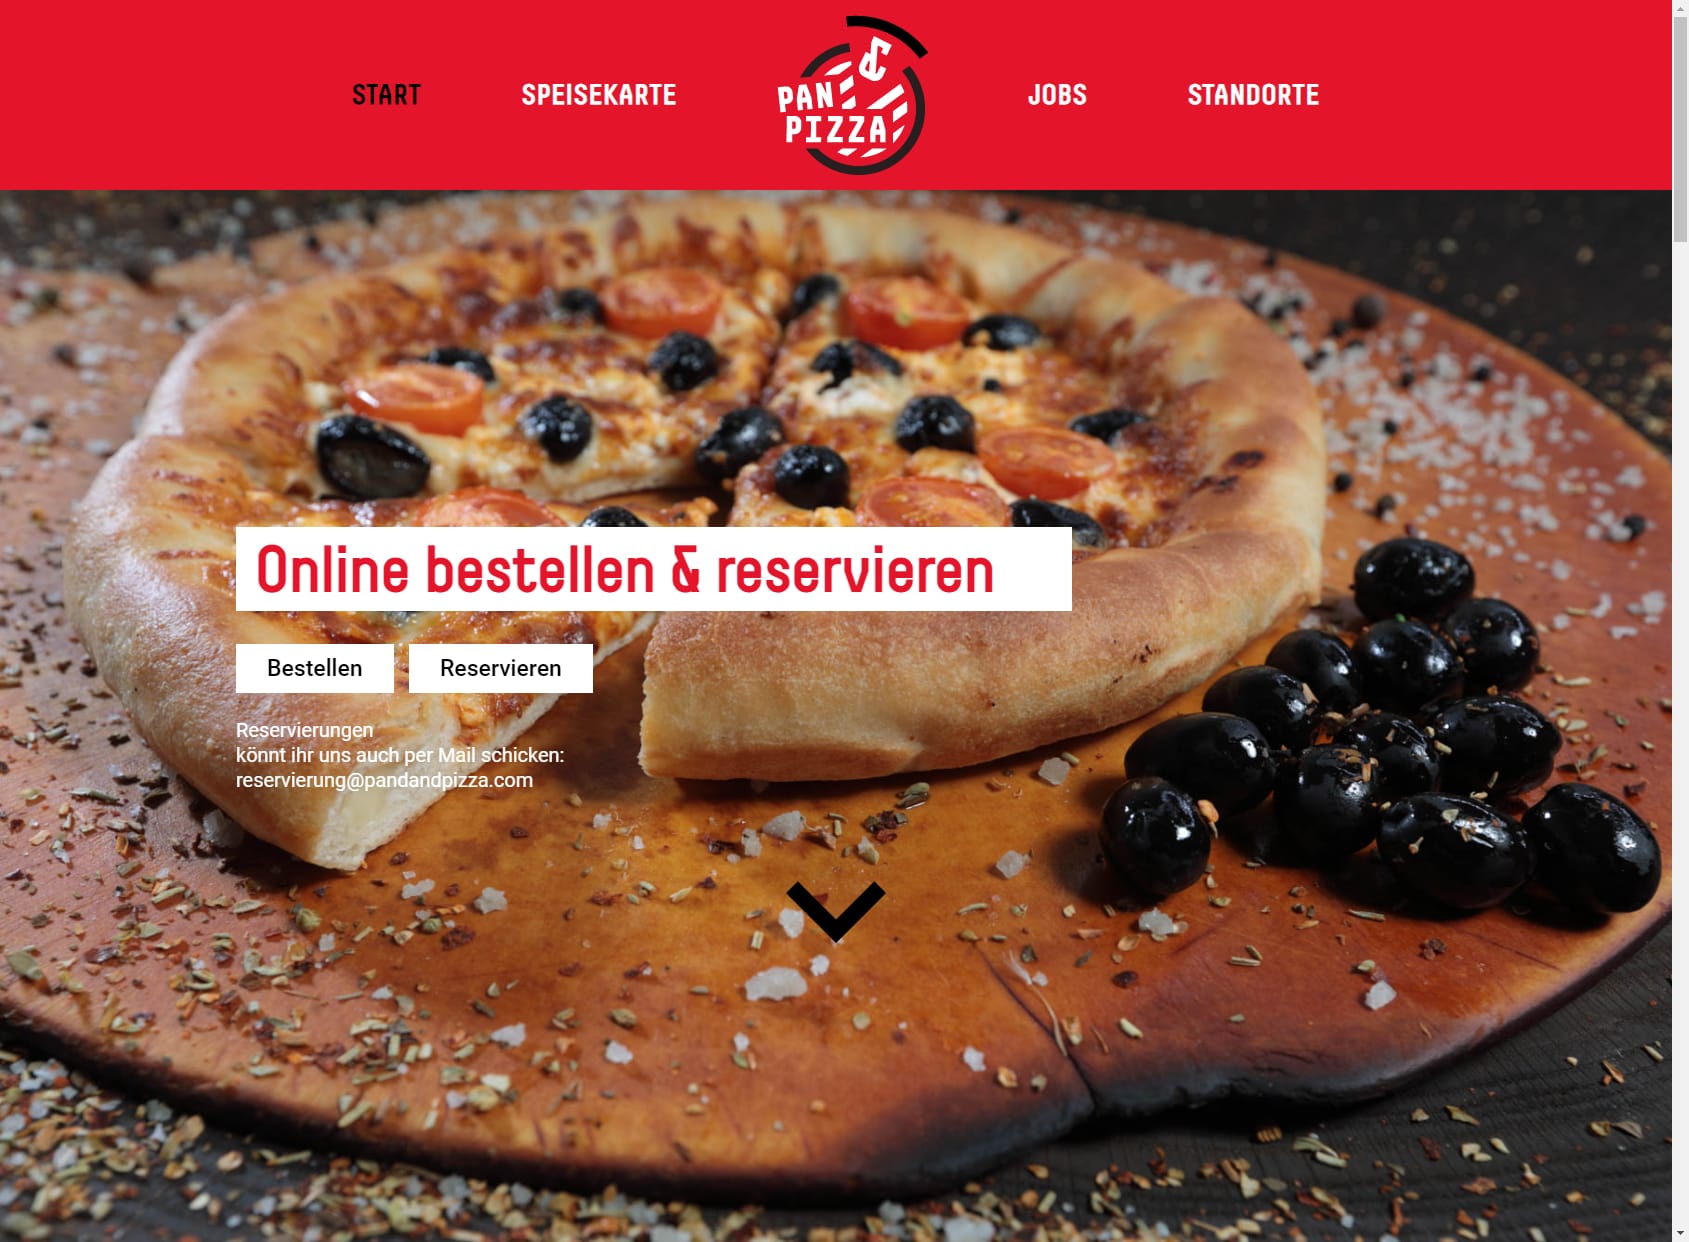 Pan & Pizza Dortmund